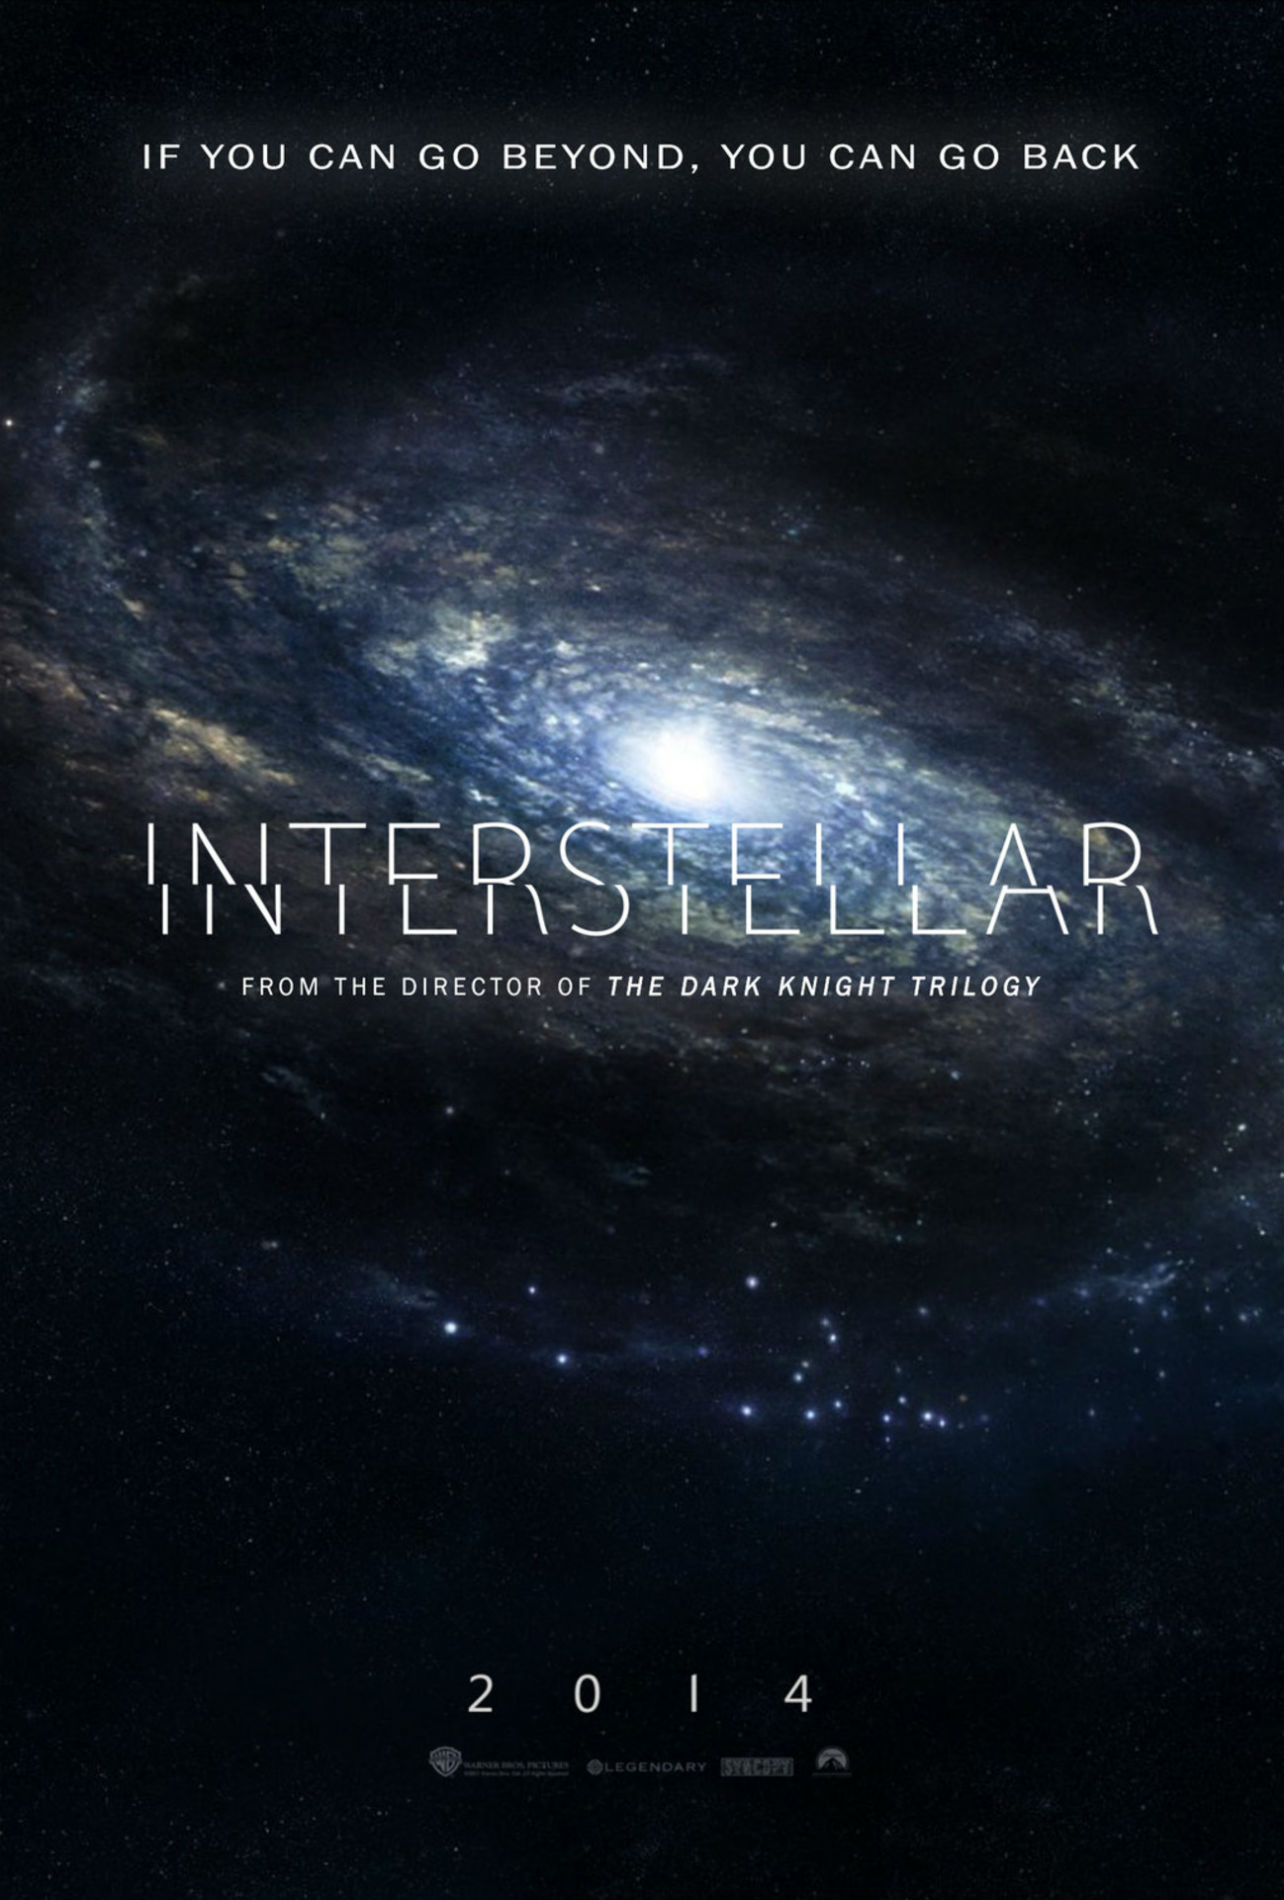 Interstellar Movie Wallpaper